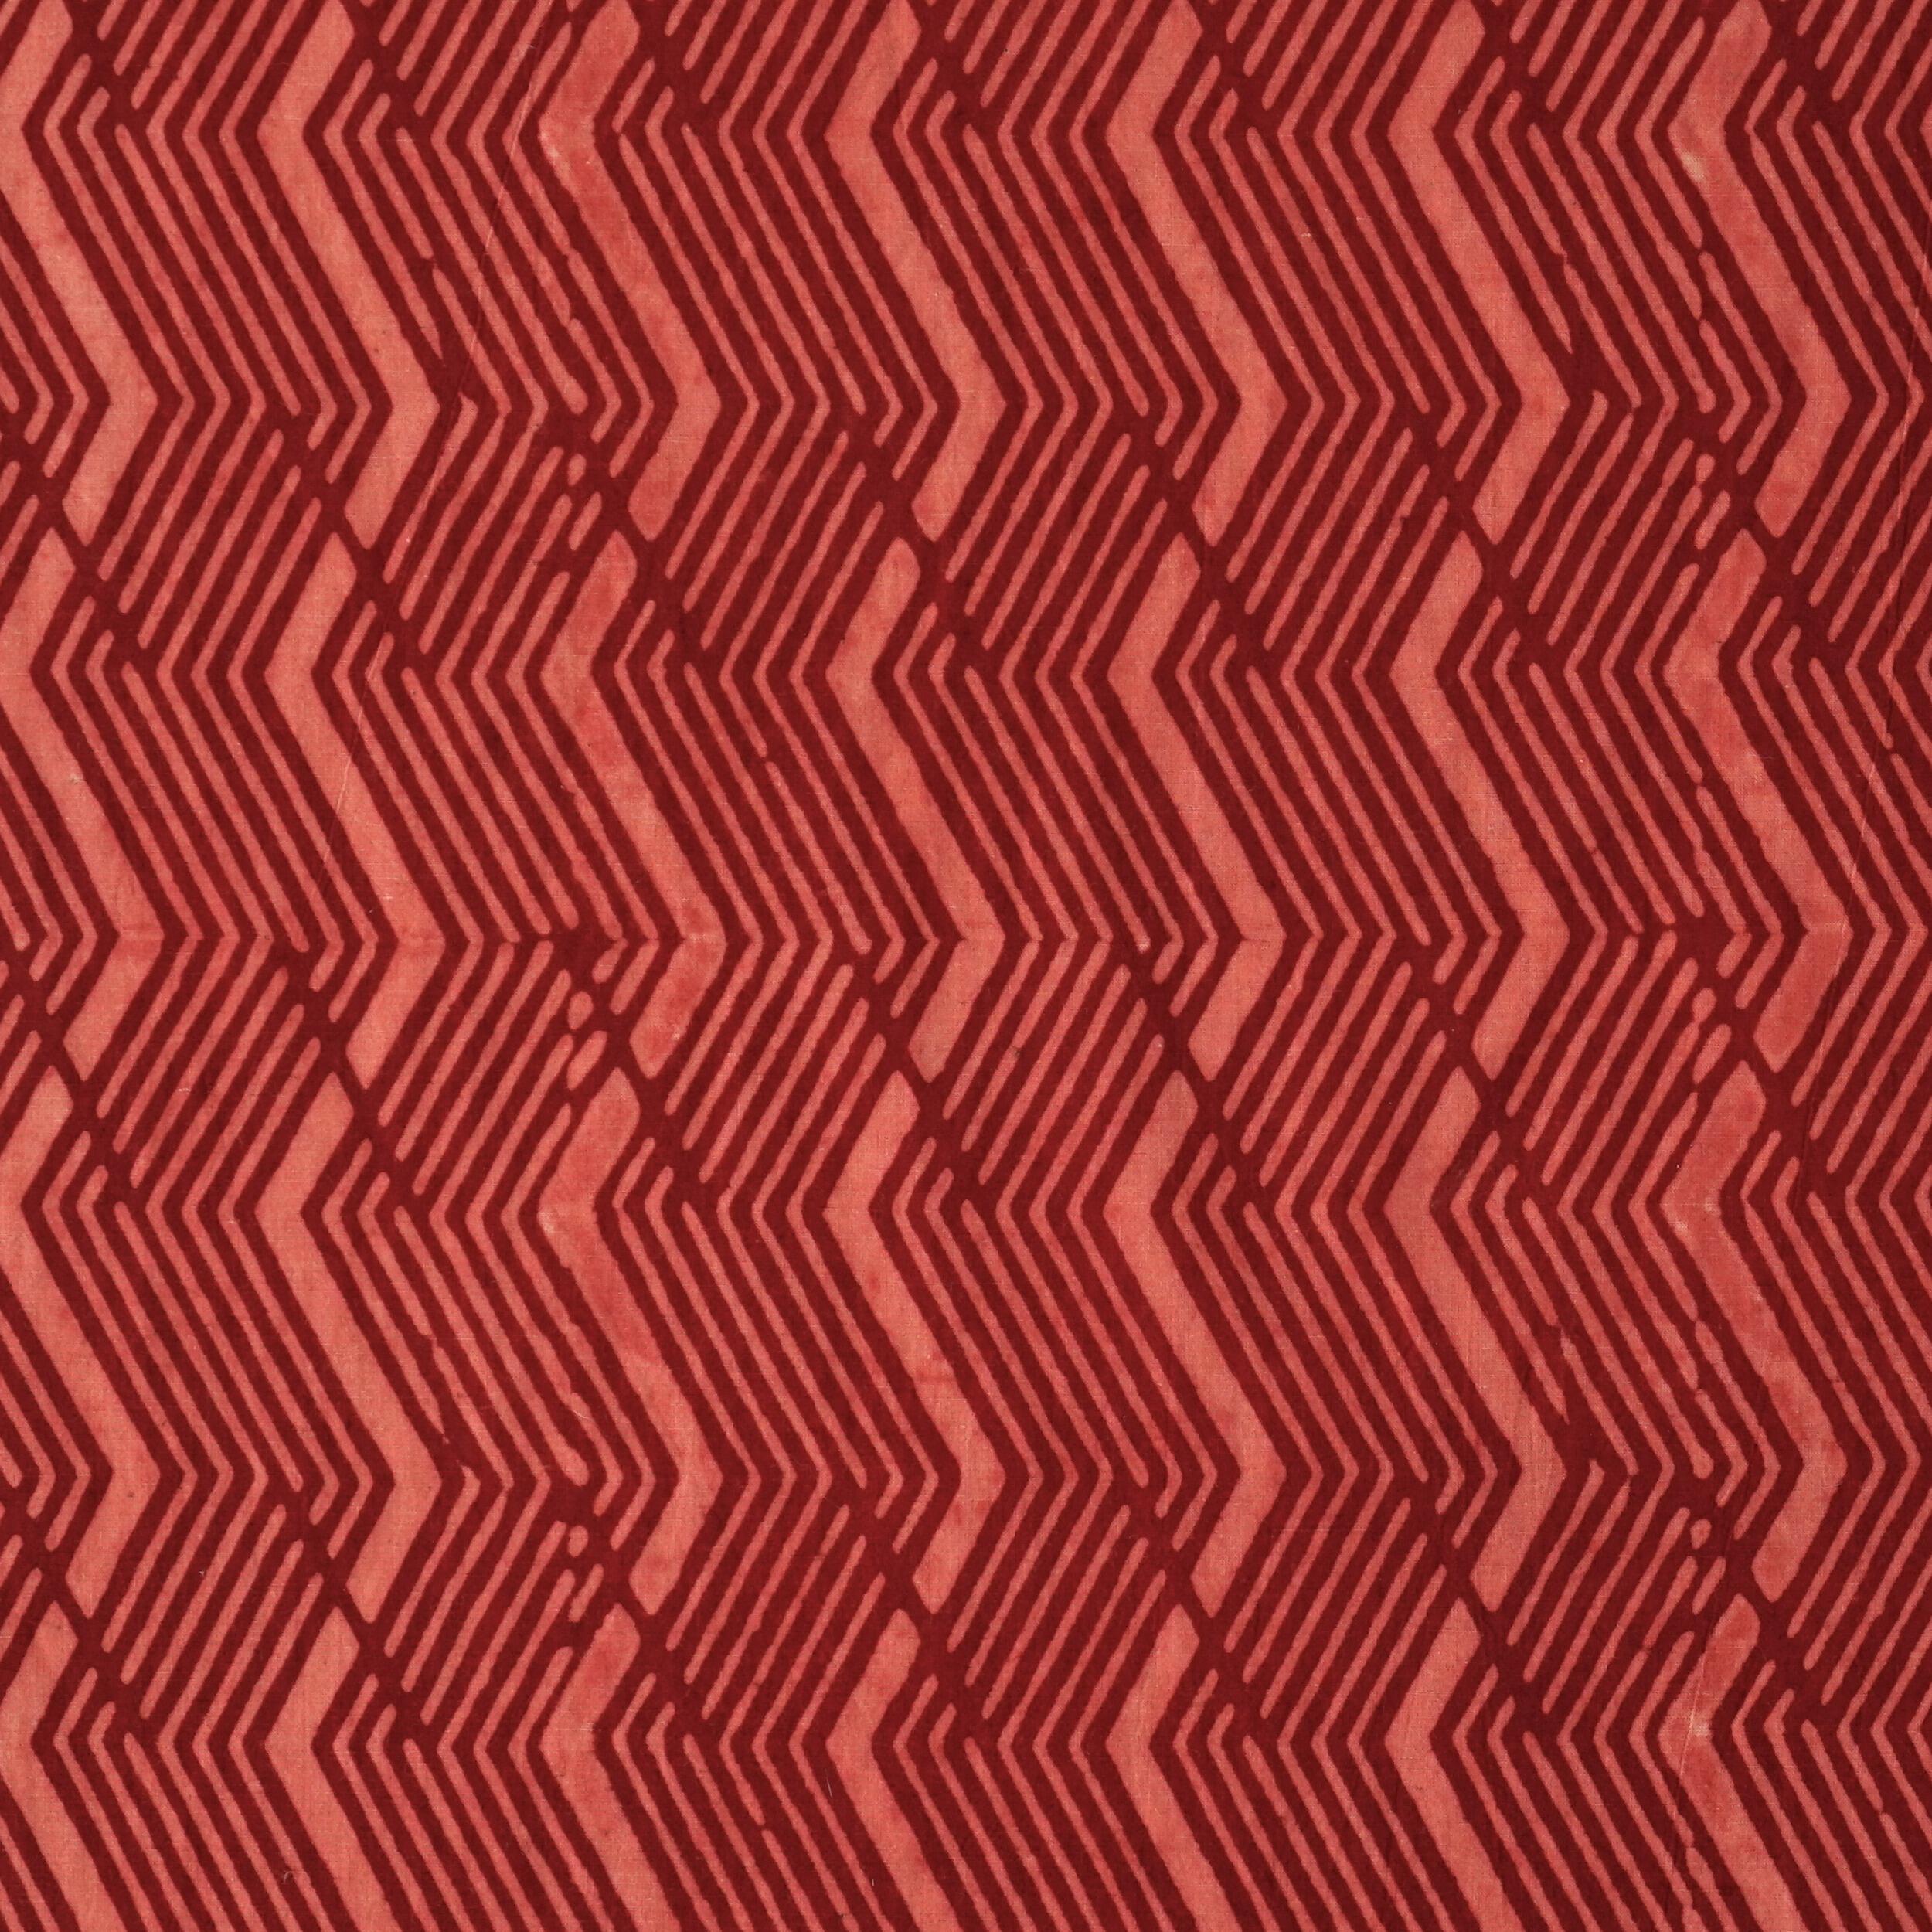 SIK18 - Indian Hand Block-Printed Cotton Cloth - Art Deco Wave Design - Red Alizarin Dye - Flat